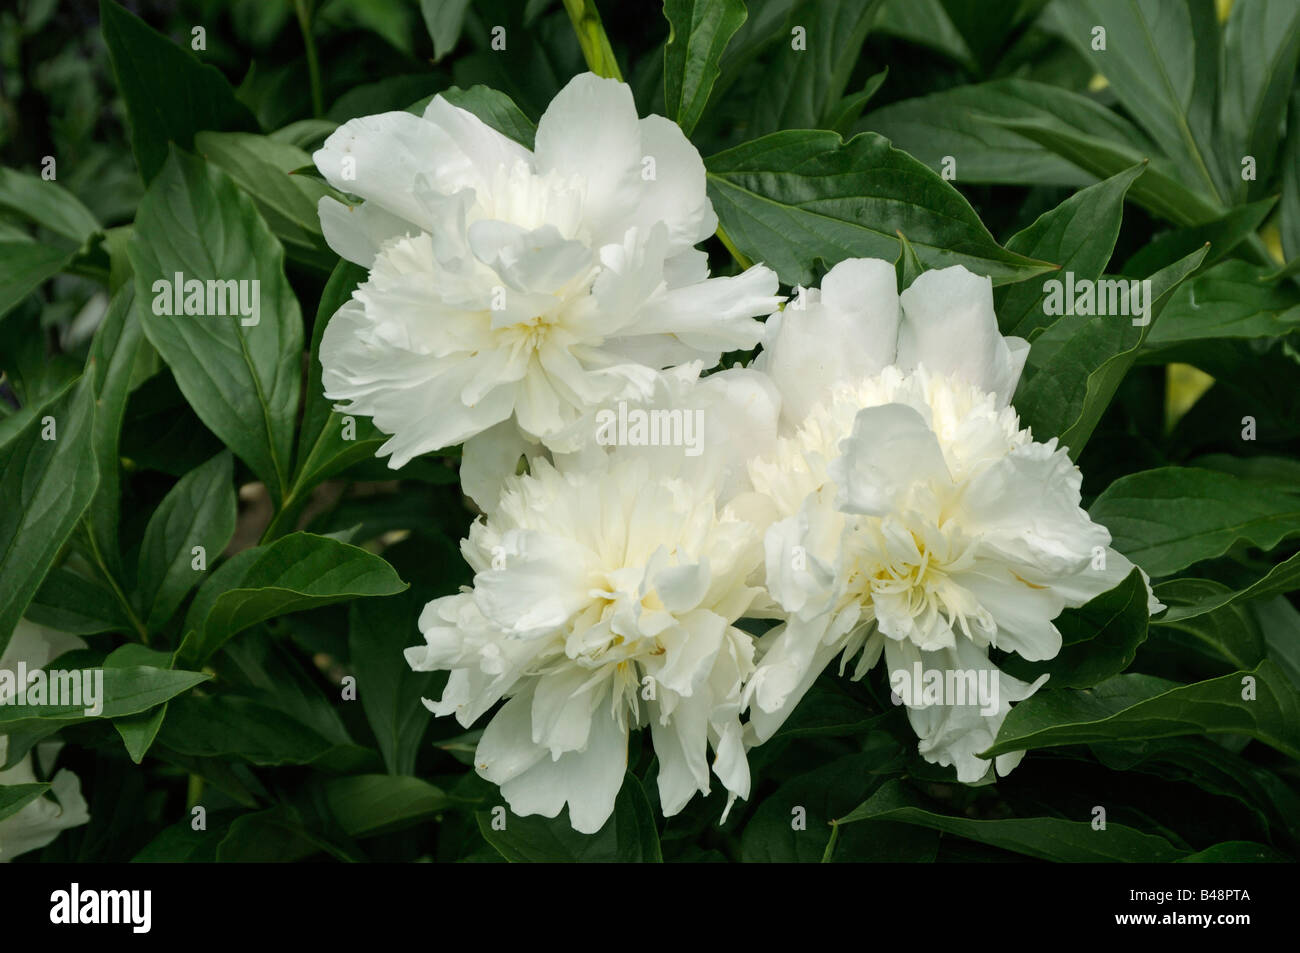 Weiße Paeony, gemeinsamen Garten Paeony, chinesische Paeony (Paeonia Lactiflora), Sorte: Primvere, Blumen Stockfoto